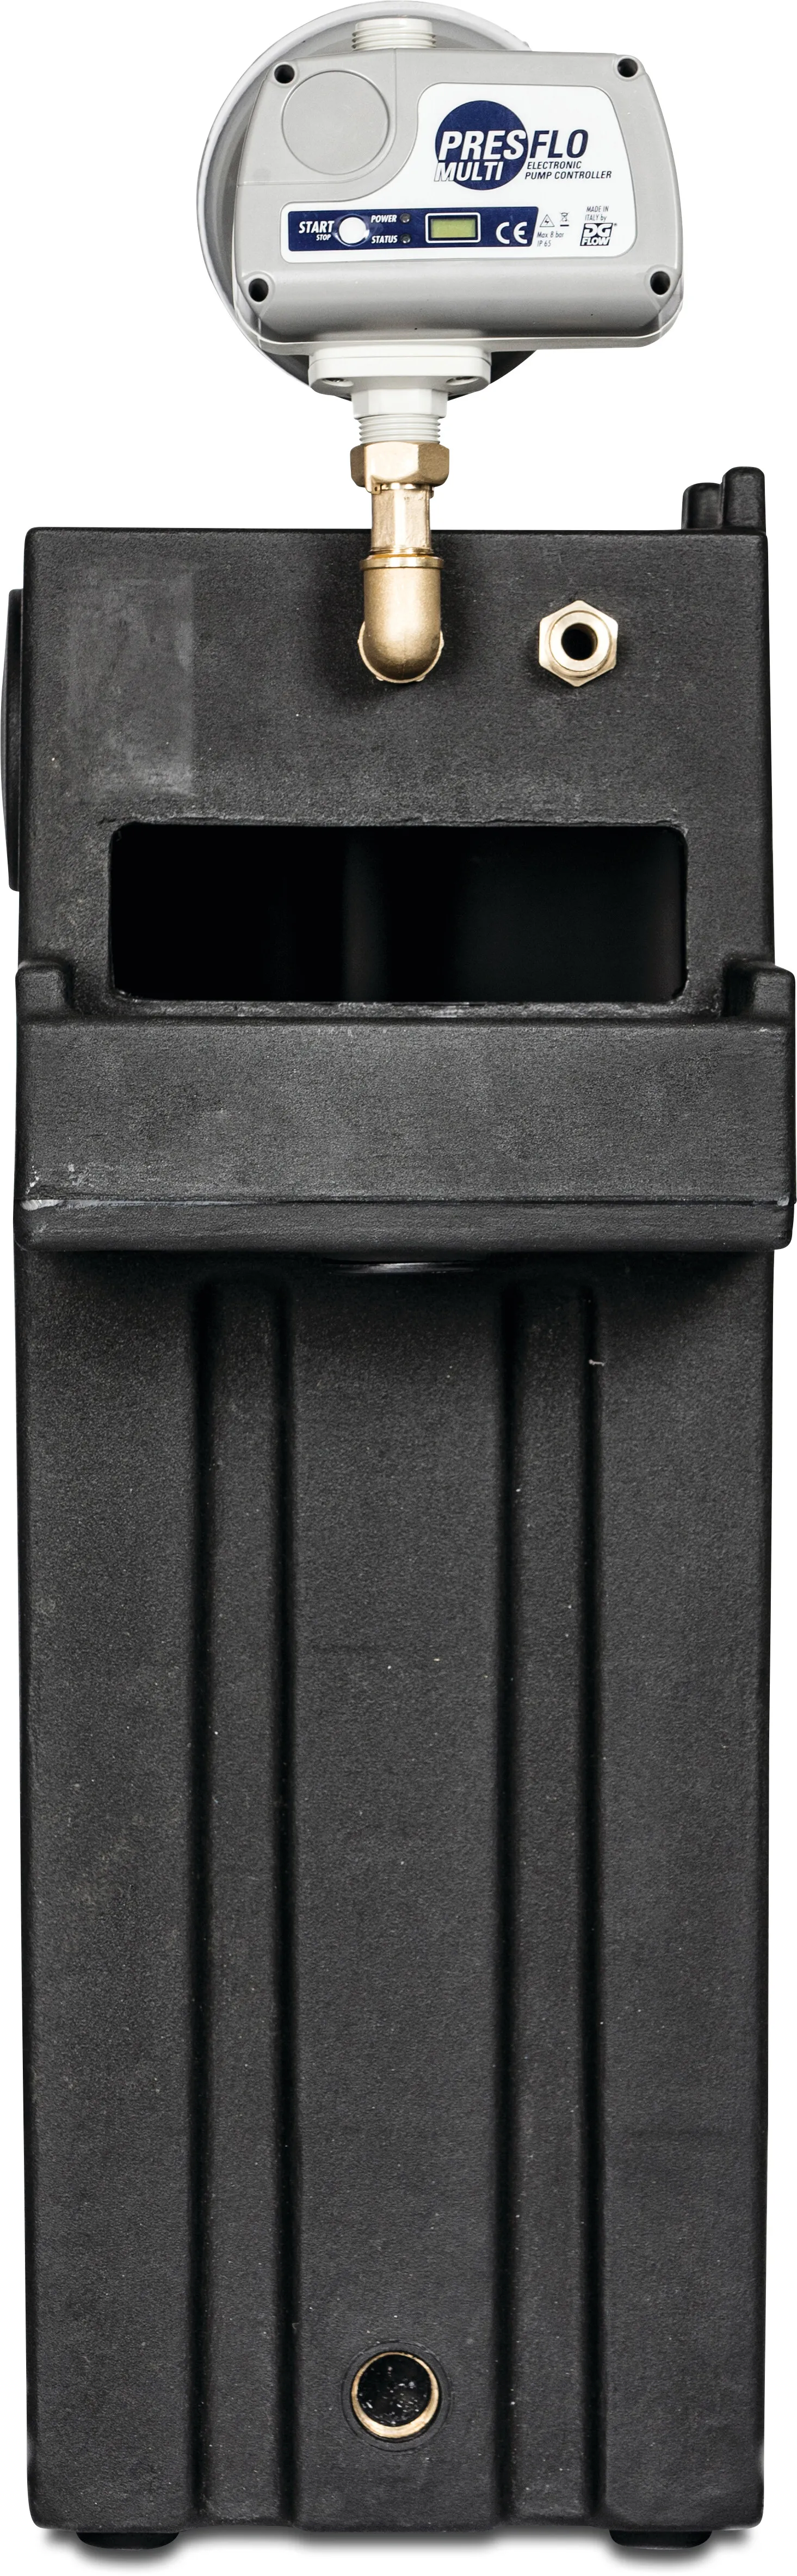 Zulaufbehälter 3/4" x 1" Außengewinde 230VAC BELGAQUA type Minisub & Presflo-Multi